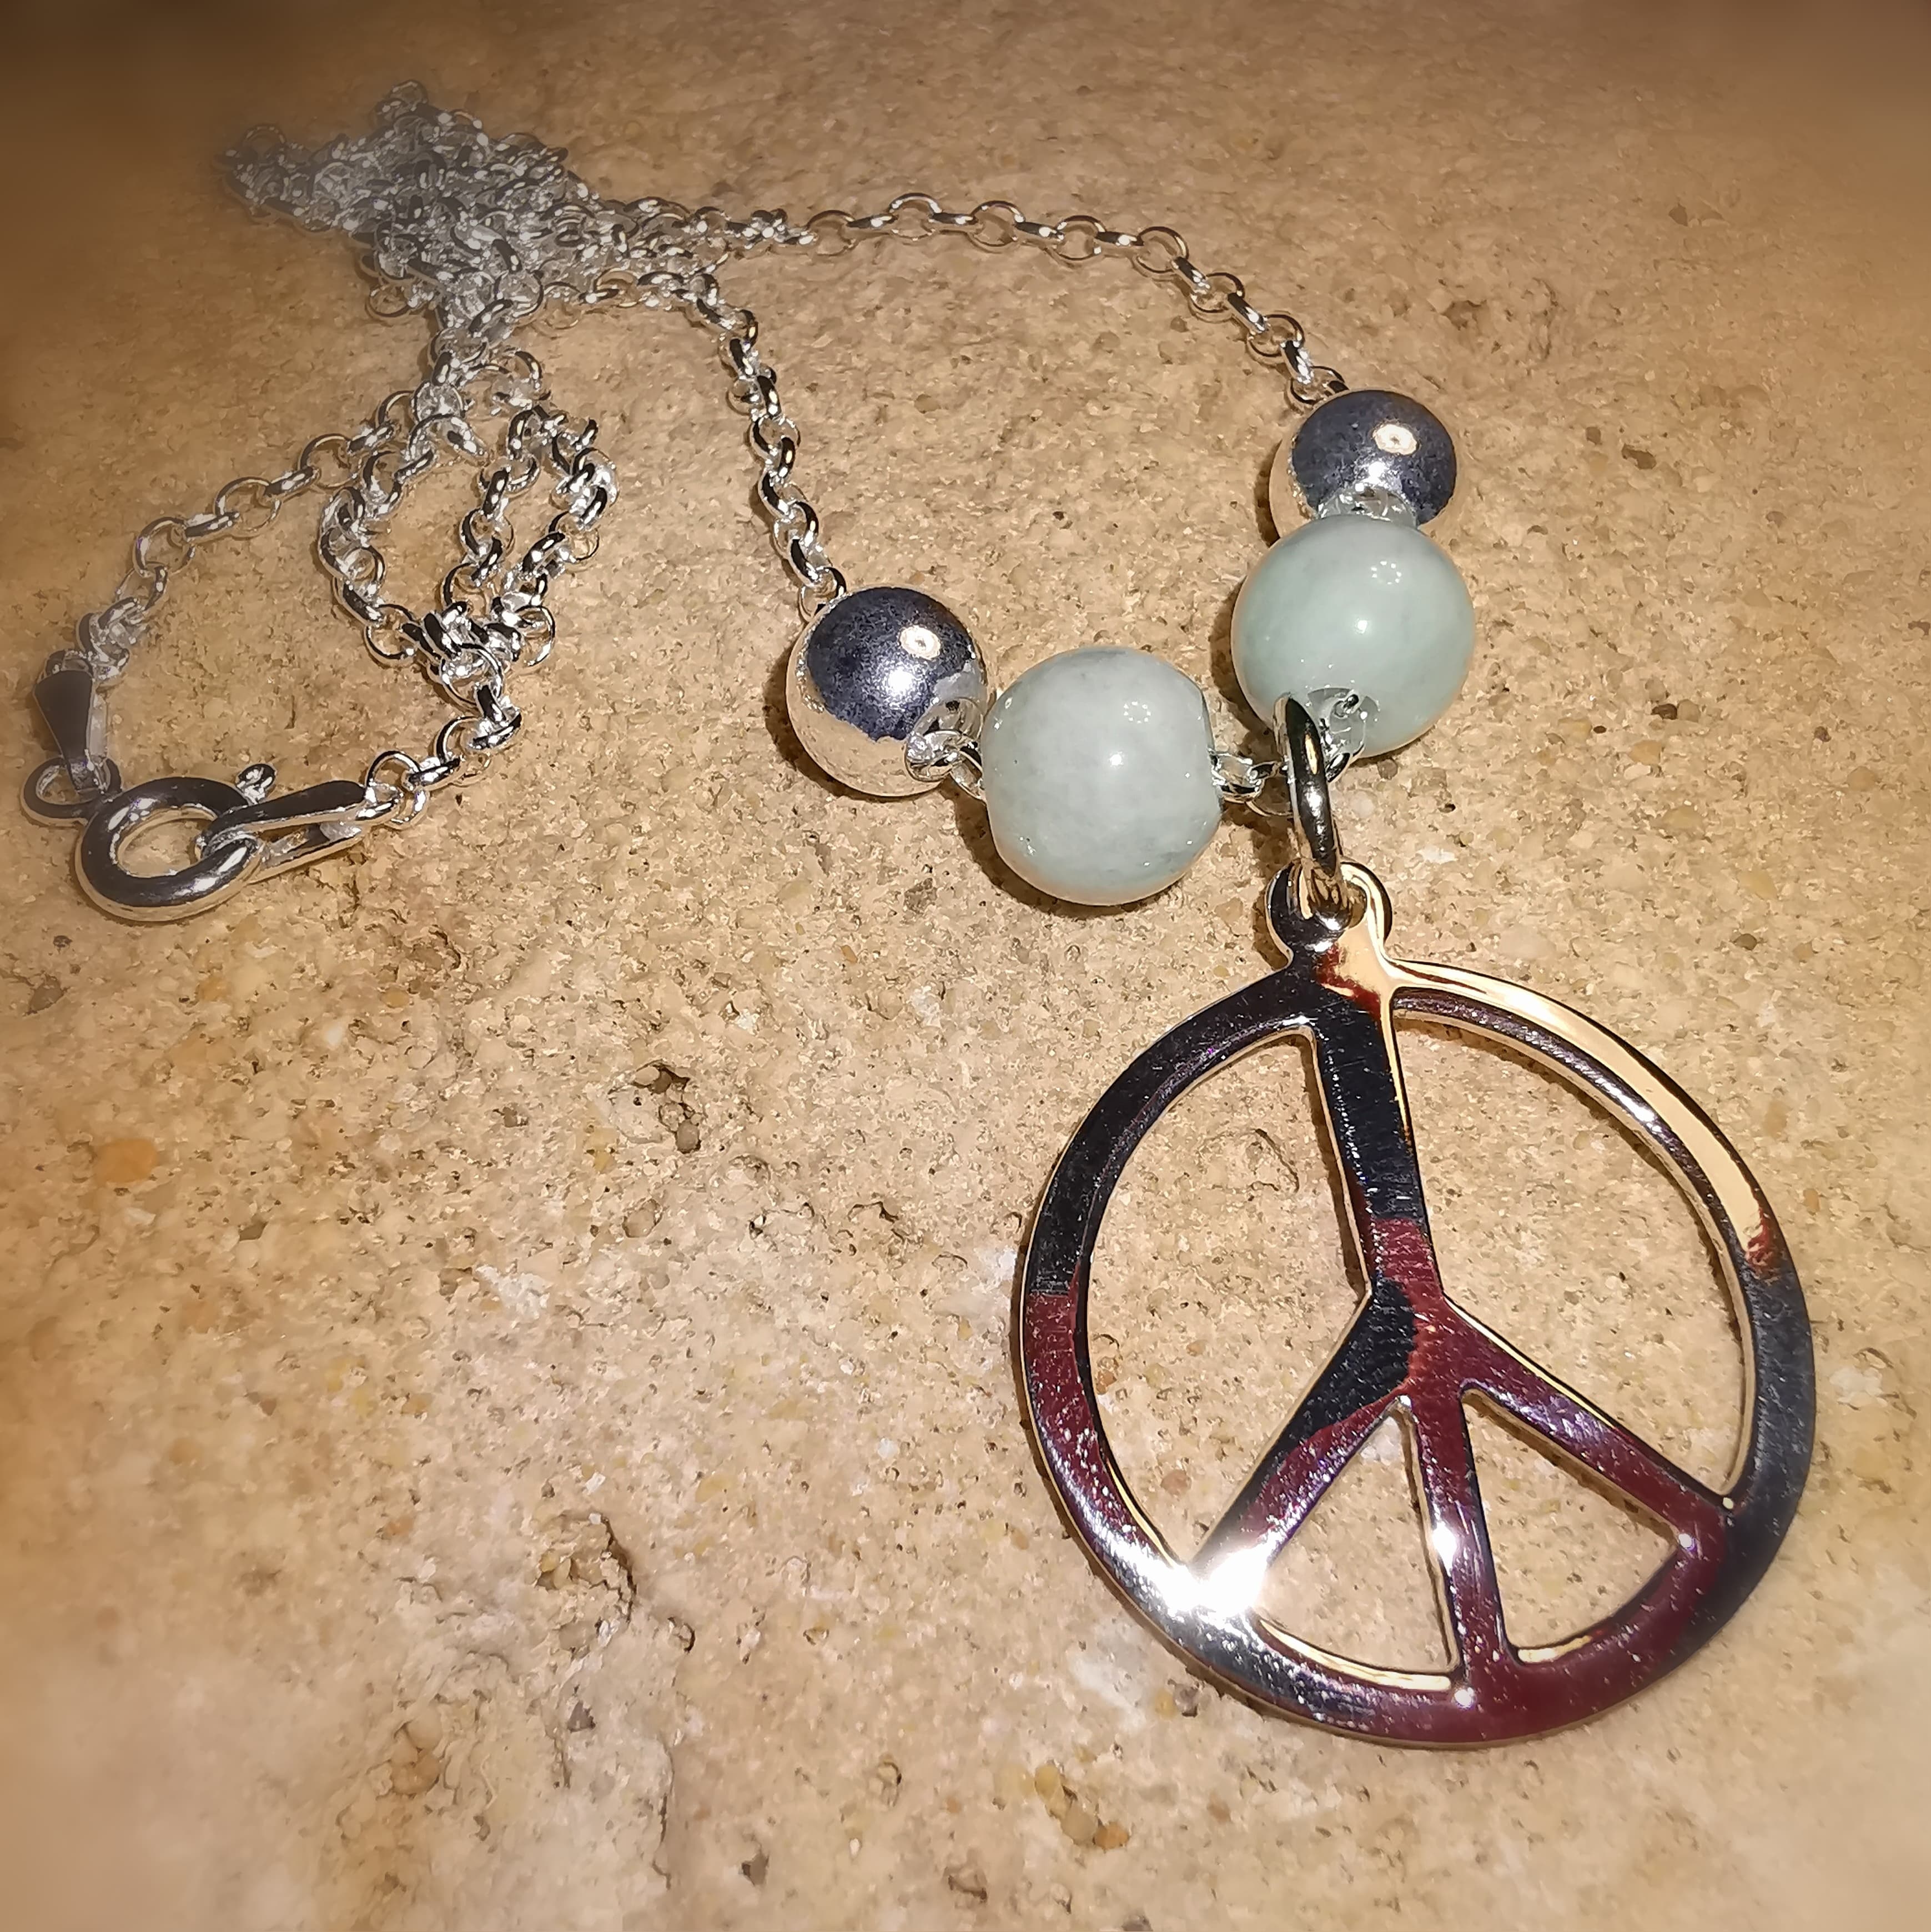 Frieden - Peace - Paz, Sterlingsilber Amazonit Edelstein Design Karma Kette, freies Herz